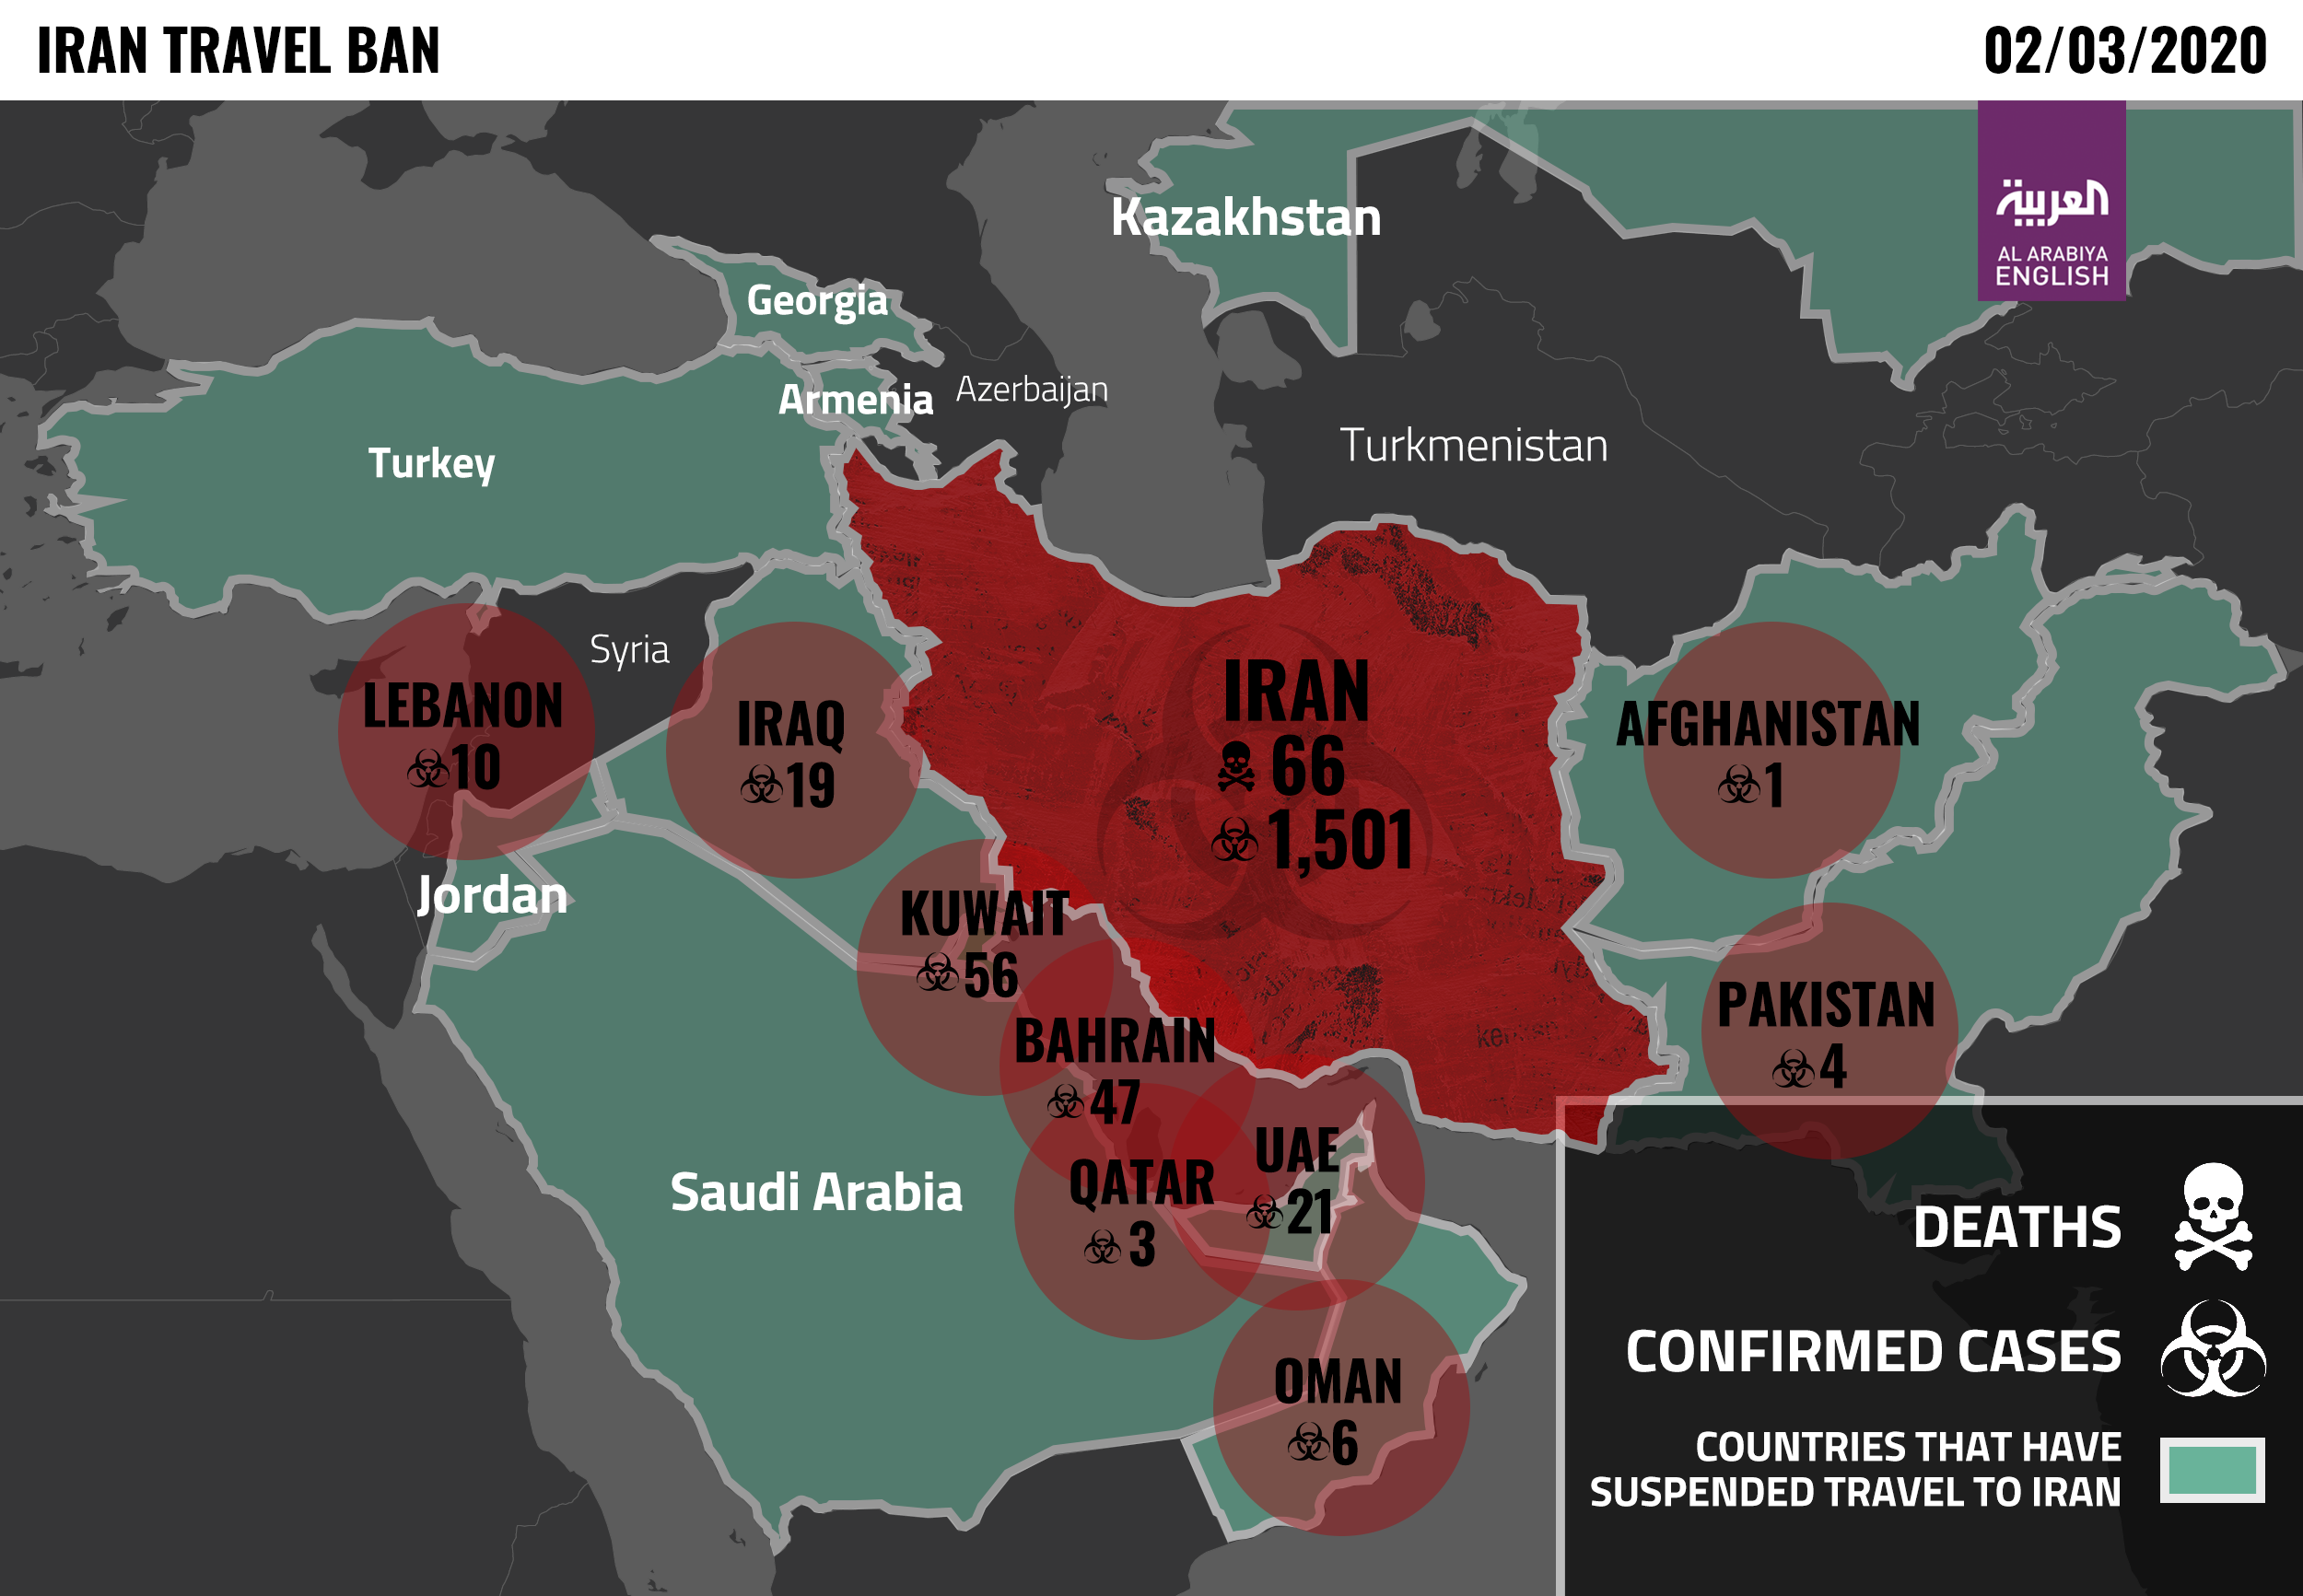 Iran travel ban infographic 02/03/2020_Updated_2